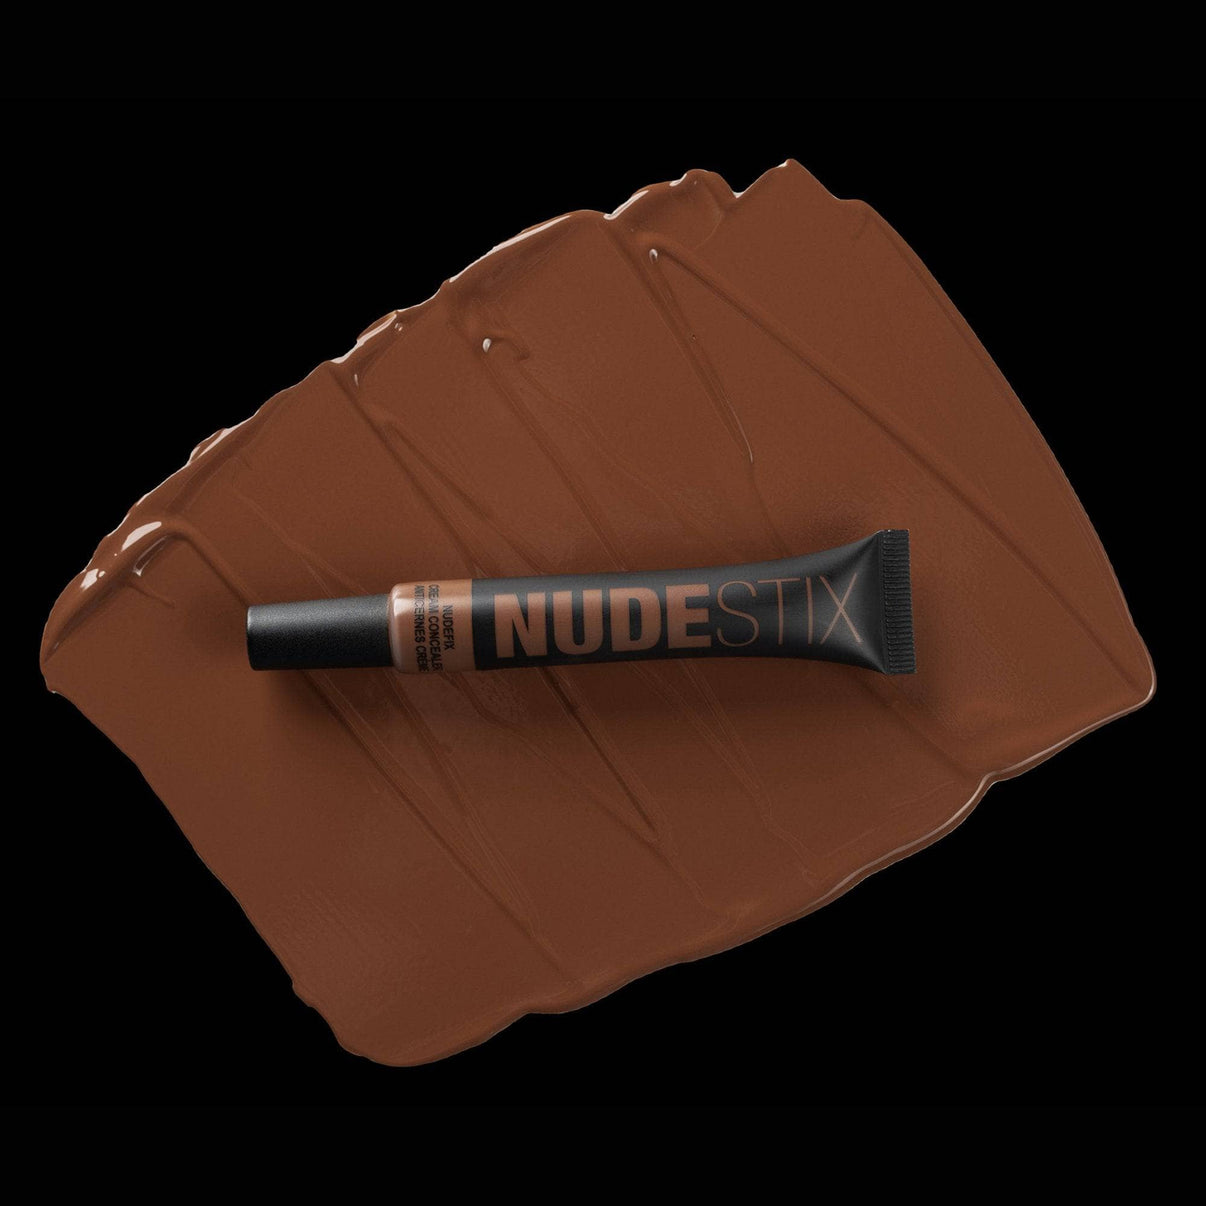 Nudefix cream concealer in shade nude 11 on top of texture swatch